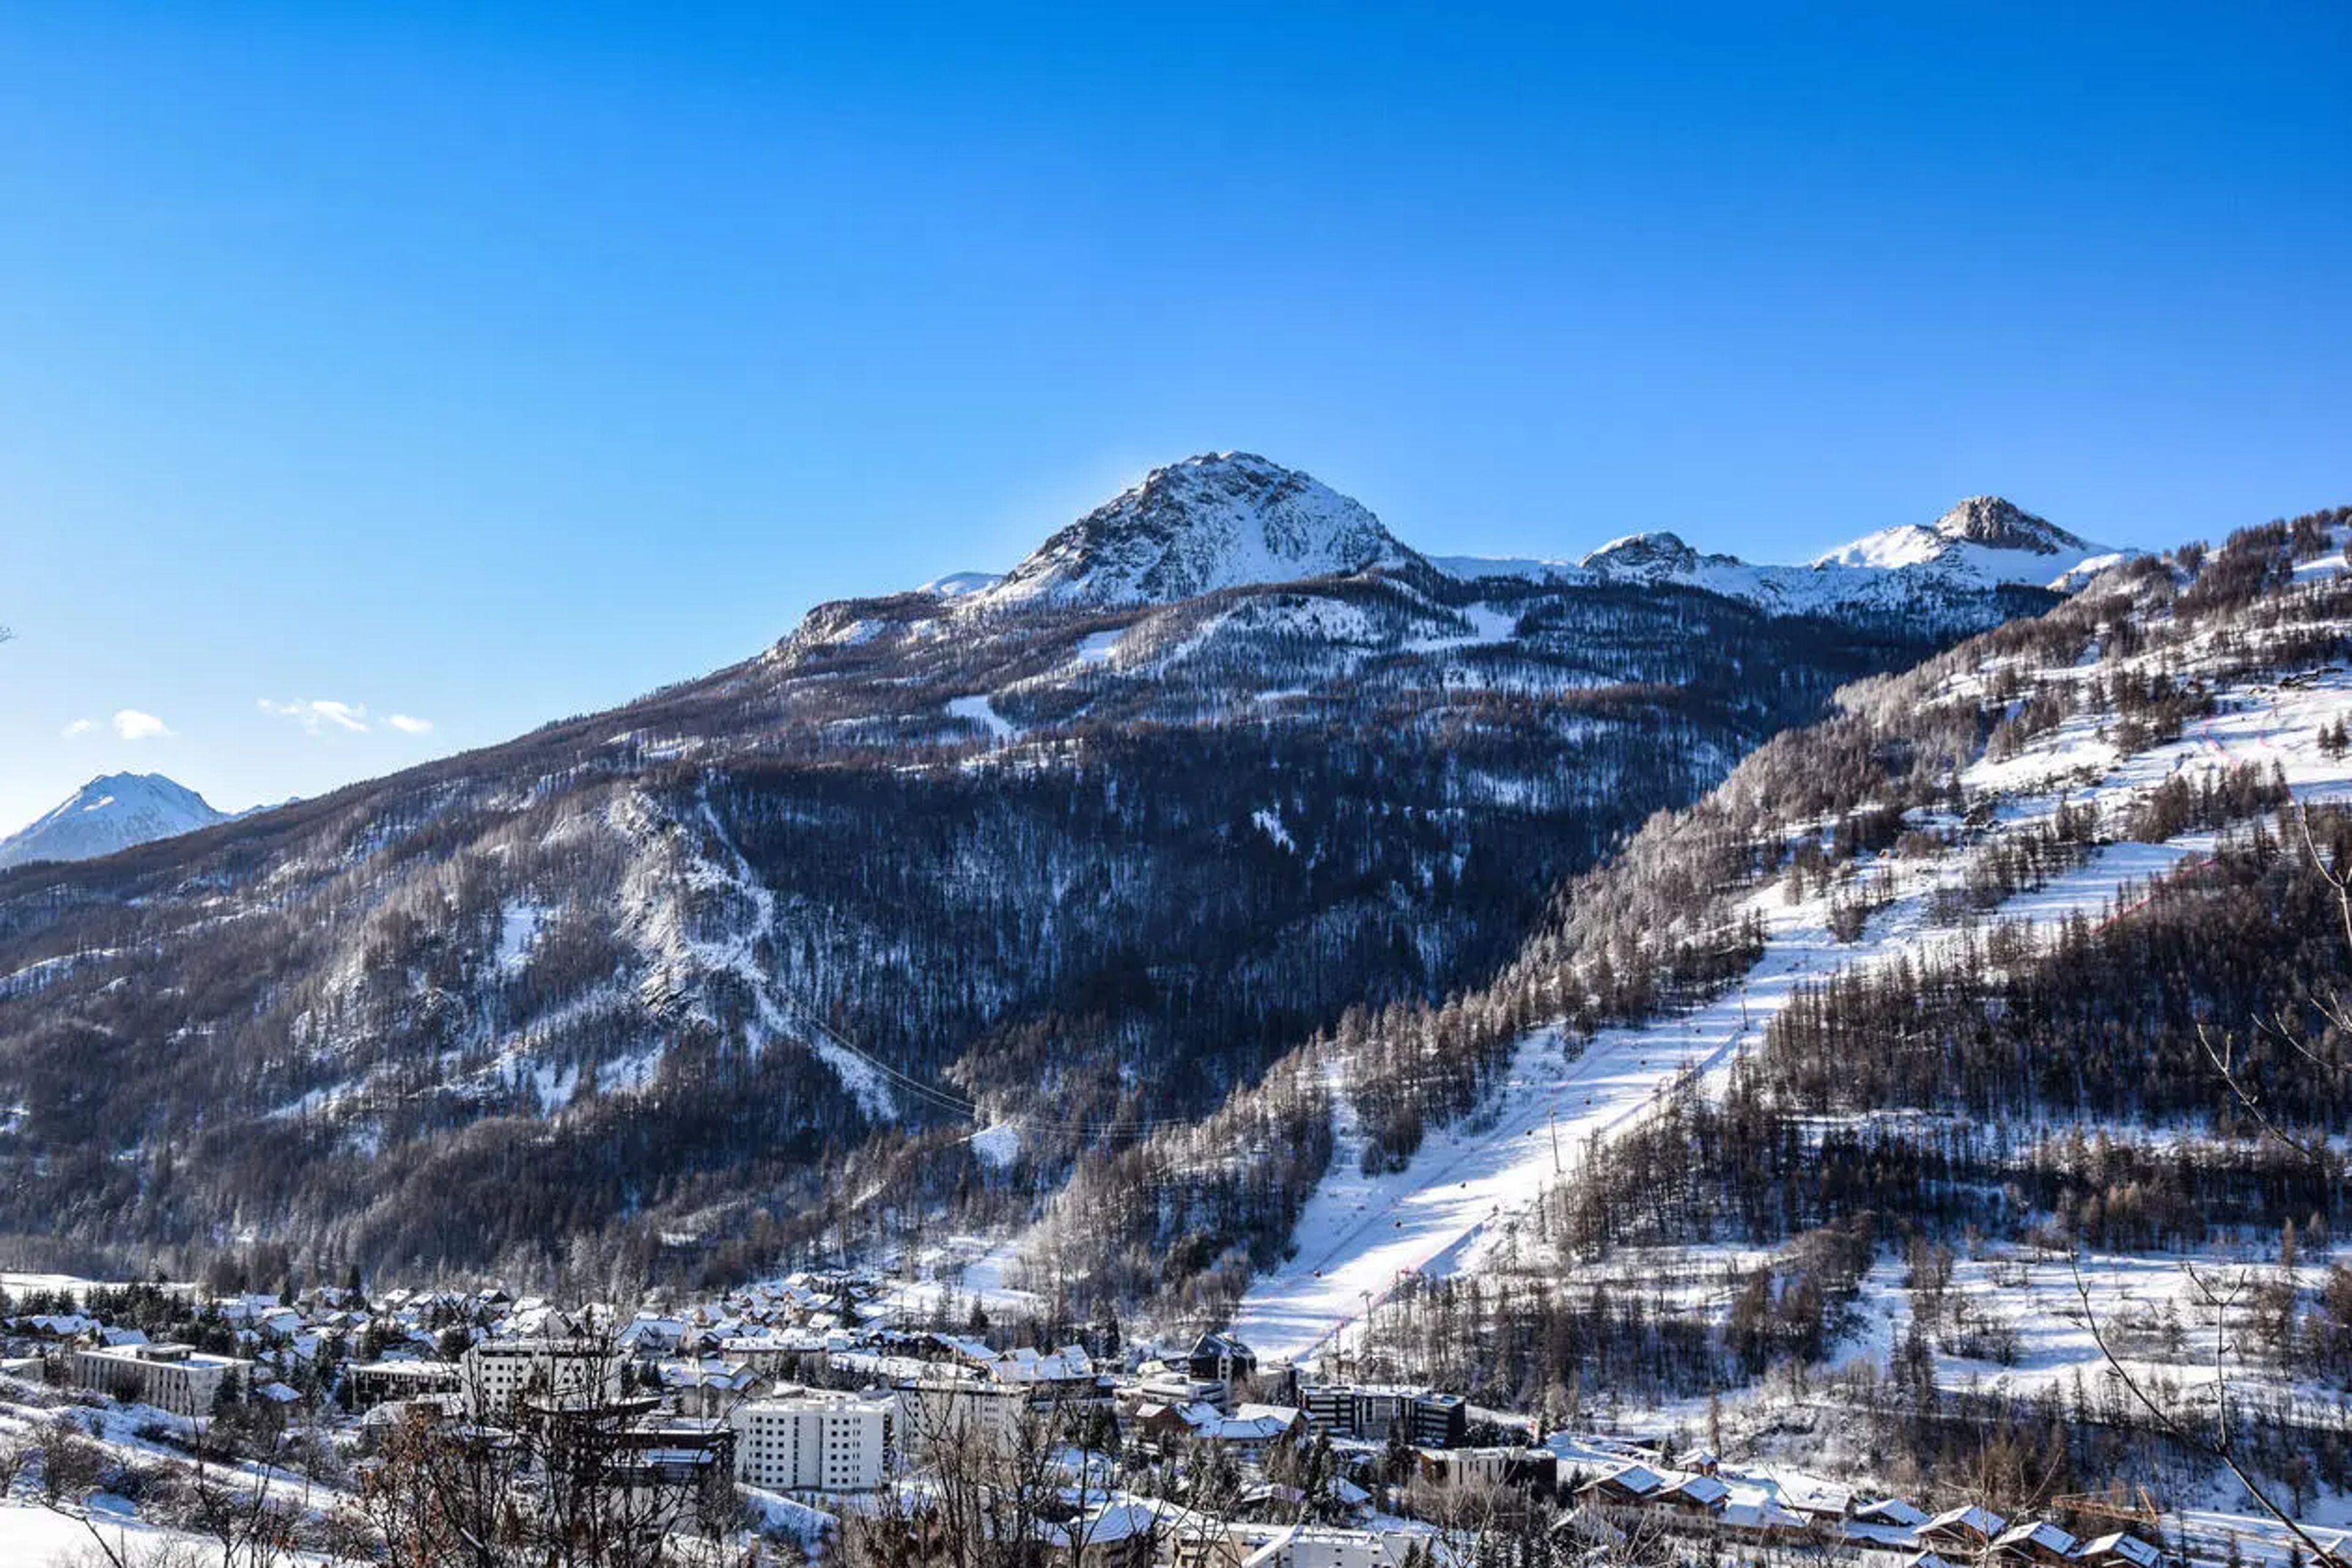 Ski resort of Serre-Chevalier